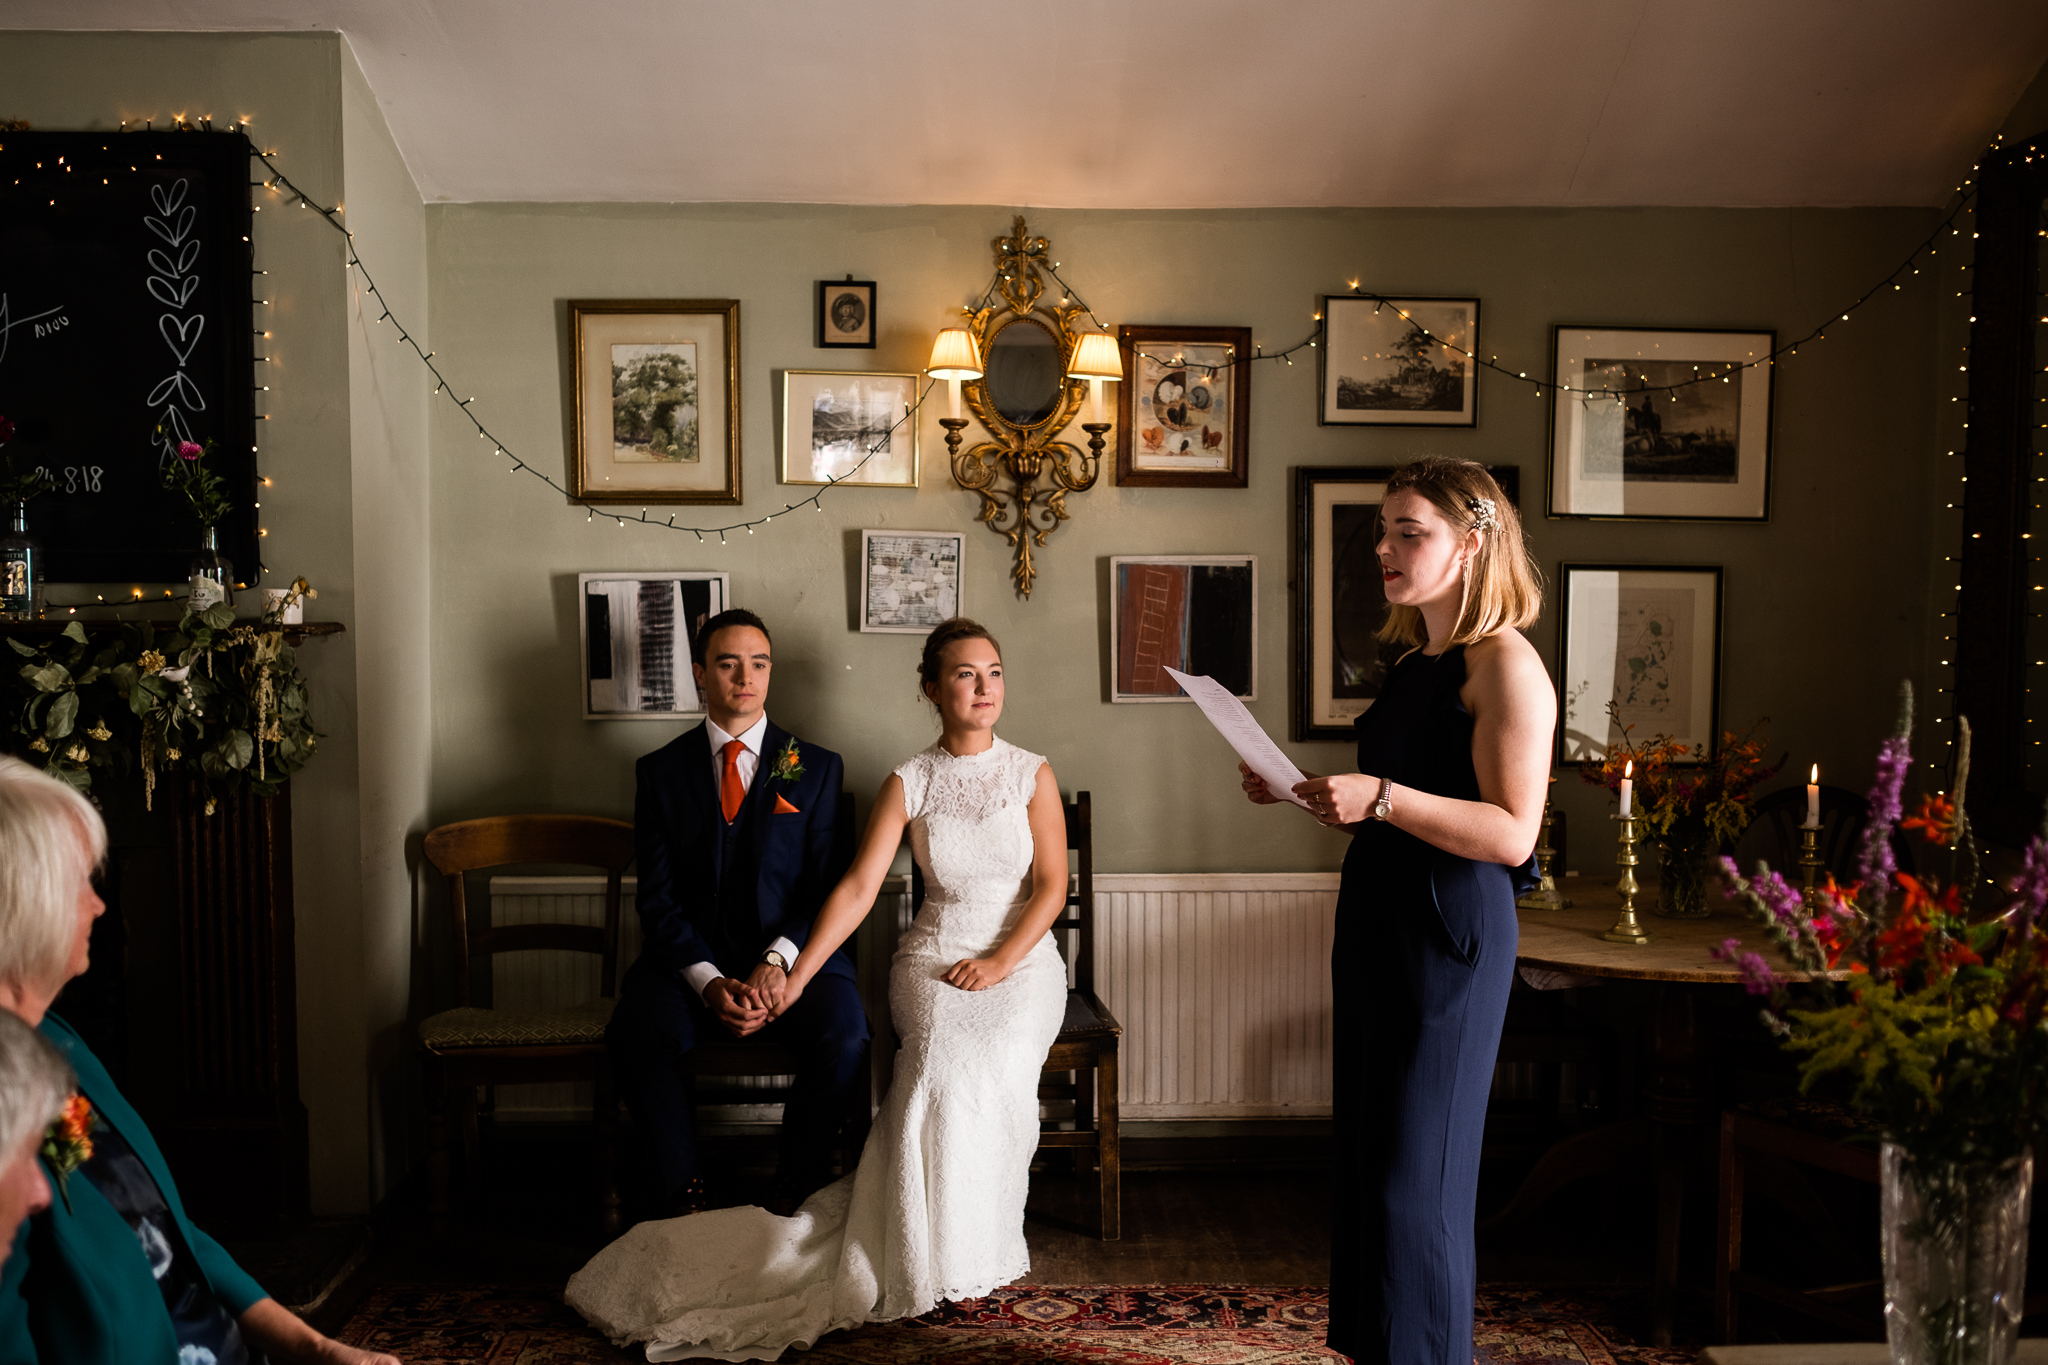 Relaxed Documentary Wedding Photography at The Wizard Inn, Alderley Edge Cheshire - Jenny Harper-29.jpg